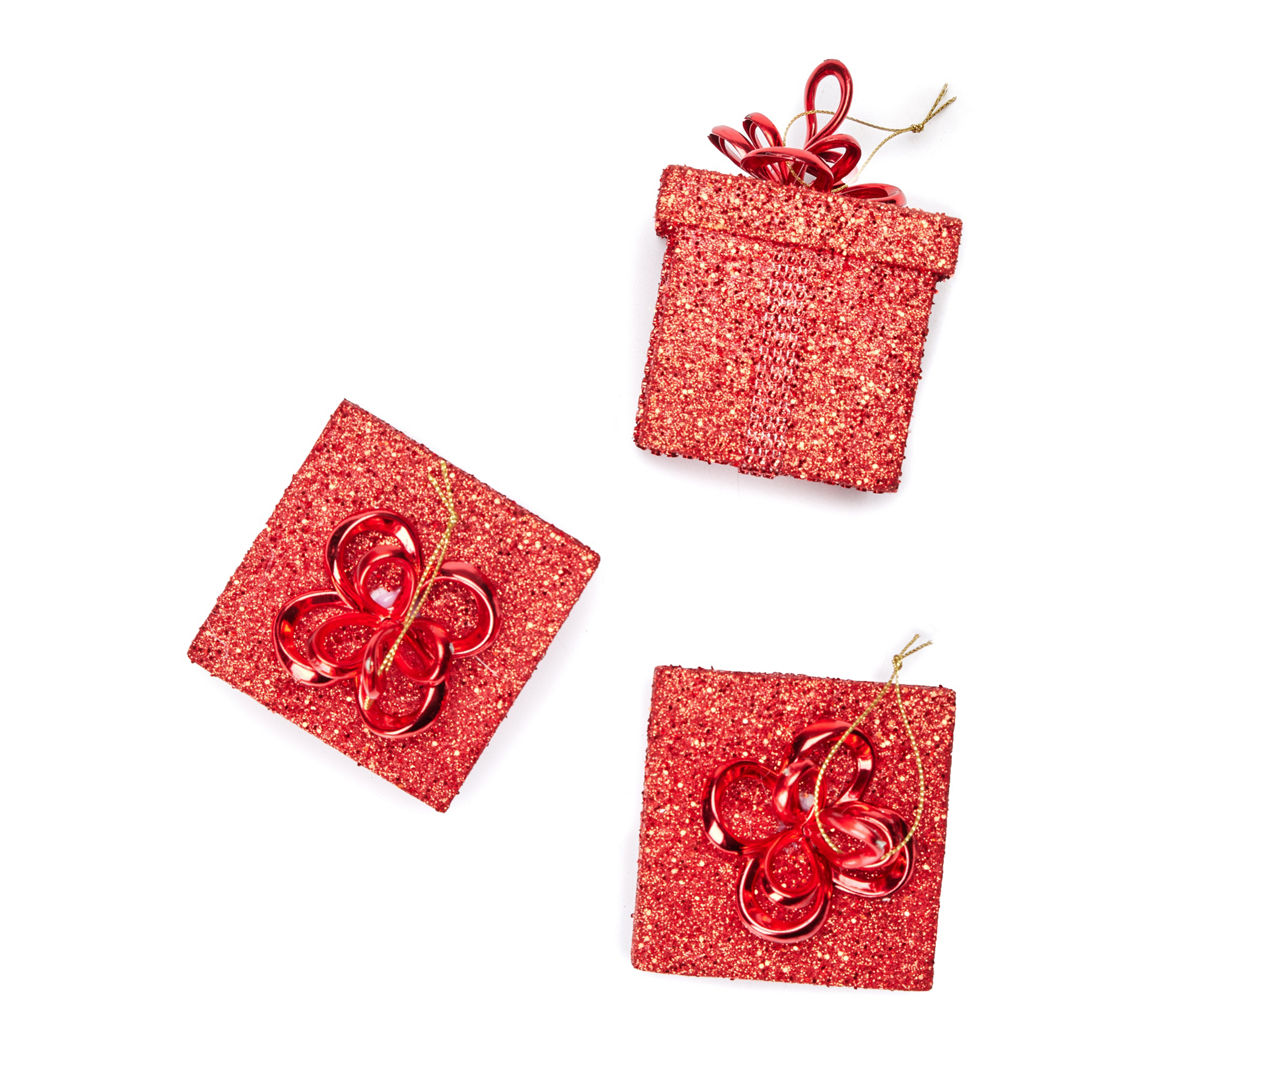 Red Glitter & Gem Gift Box Ornaments, 3-Pack